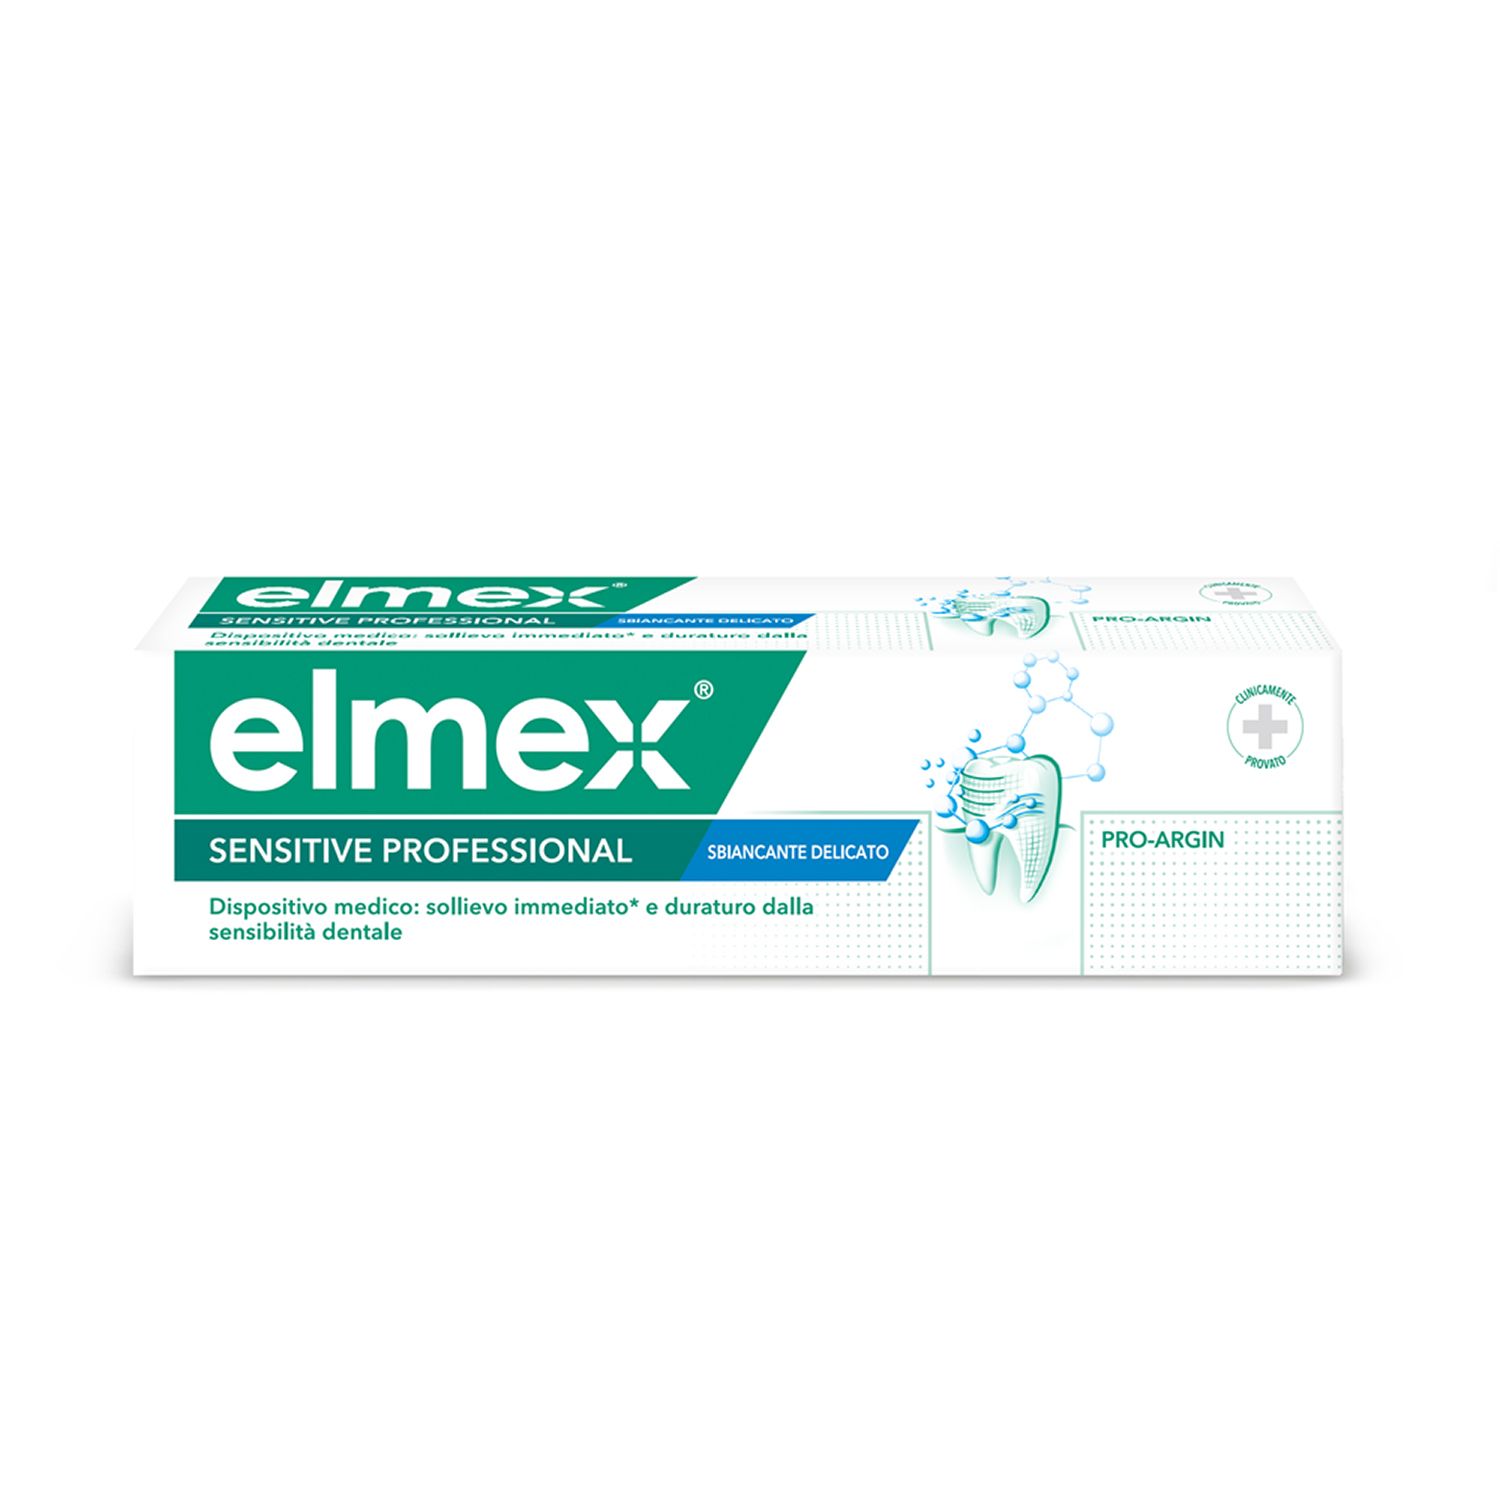 Image of Elmex® Sensitive Professional™ Dentifricio